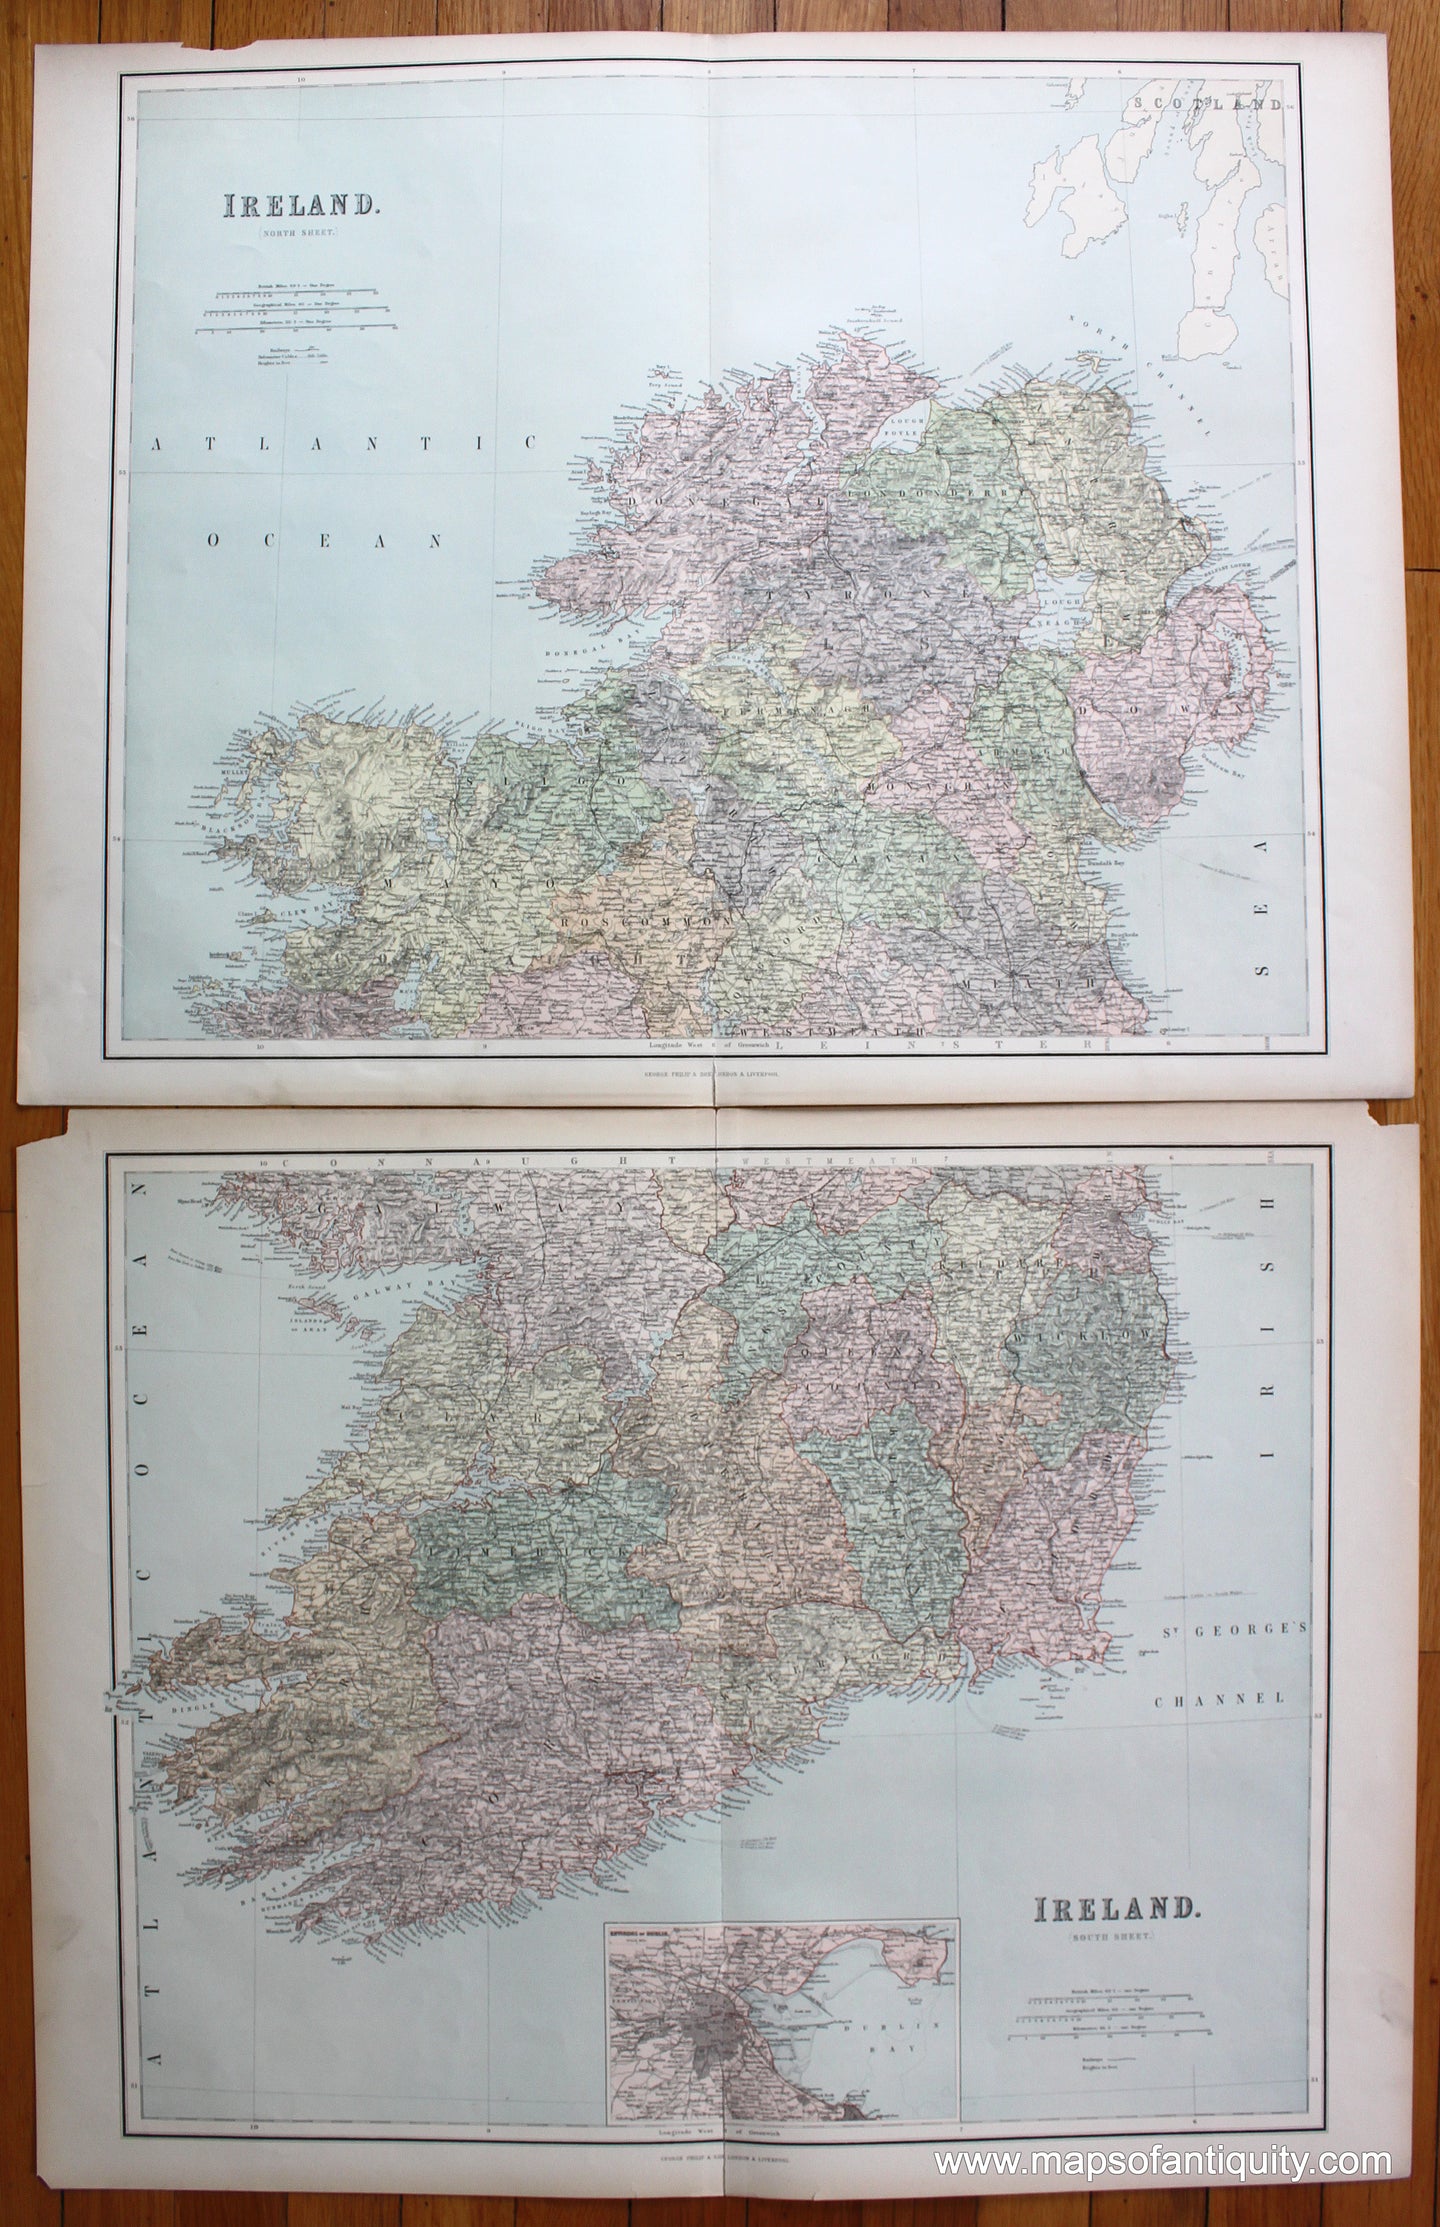 Antique-Map-Ireland-Philip-Philips-Imperial-Atlas-World-1890-1800s-19th-century-Maps-of-Antiquity